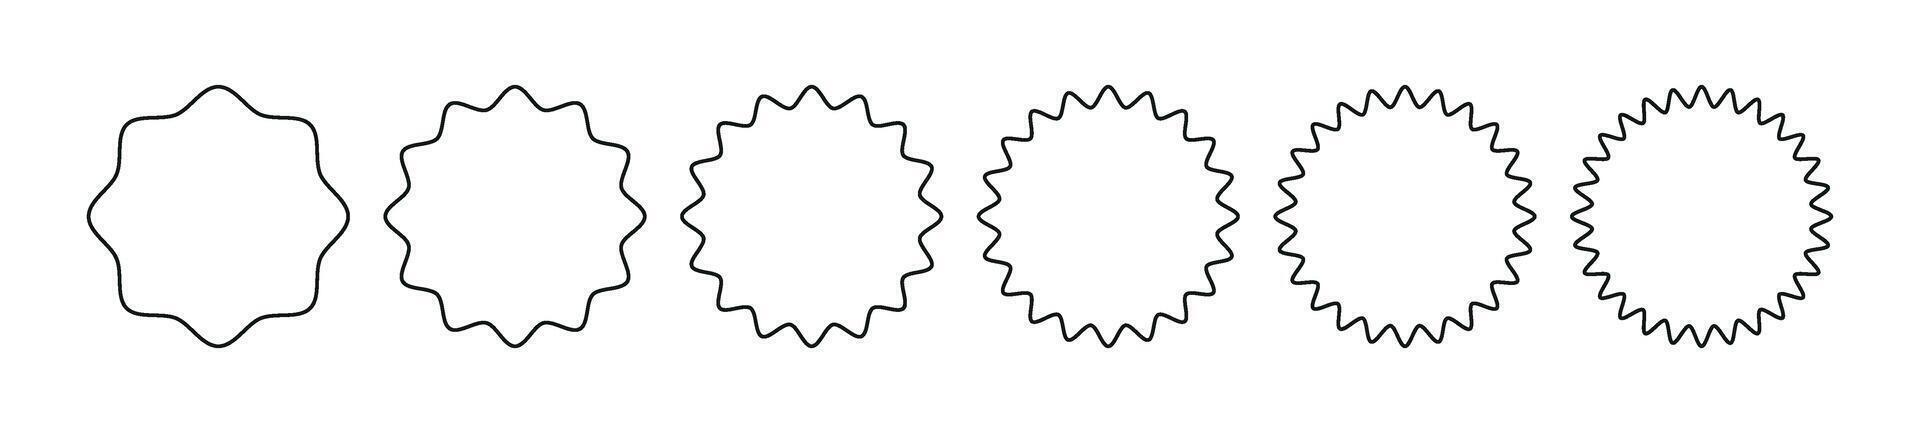 circular Insignia zigzag modelo ,redondo línea frontera borde. plano ilustración aislado en blanco antecedentes. vector